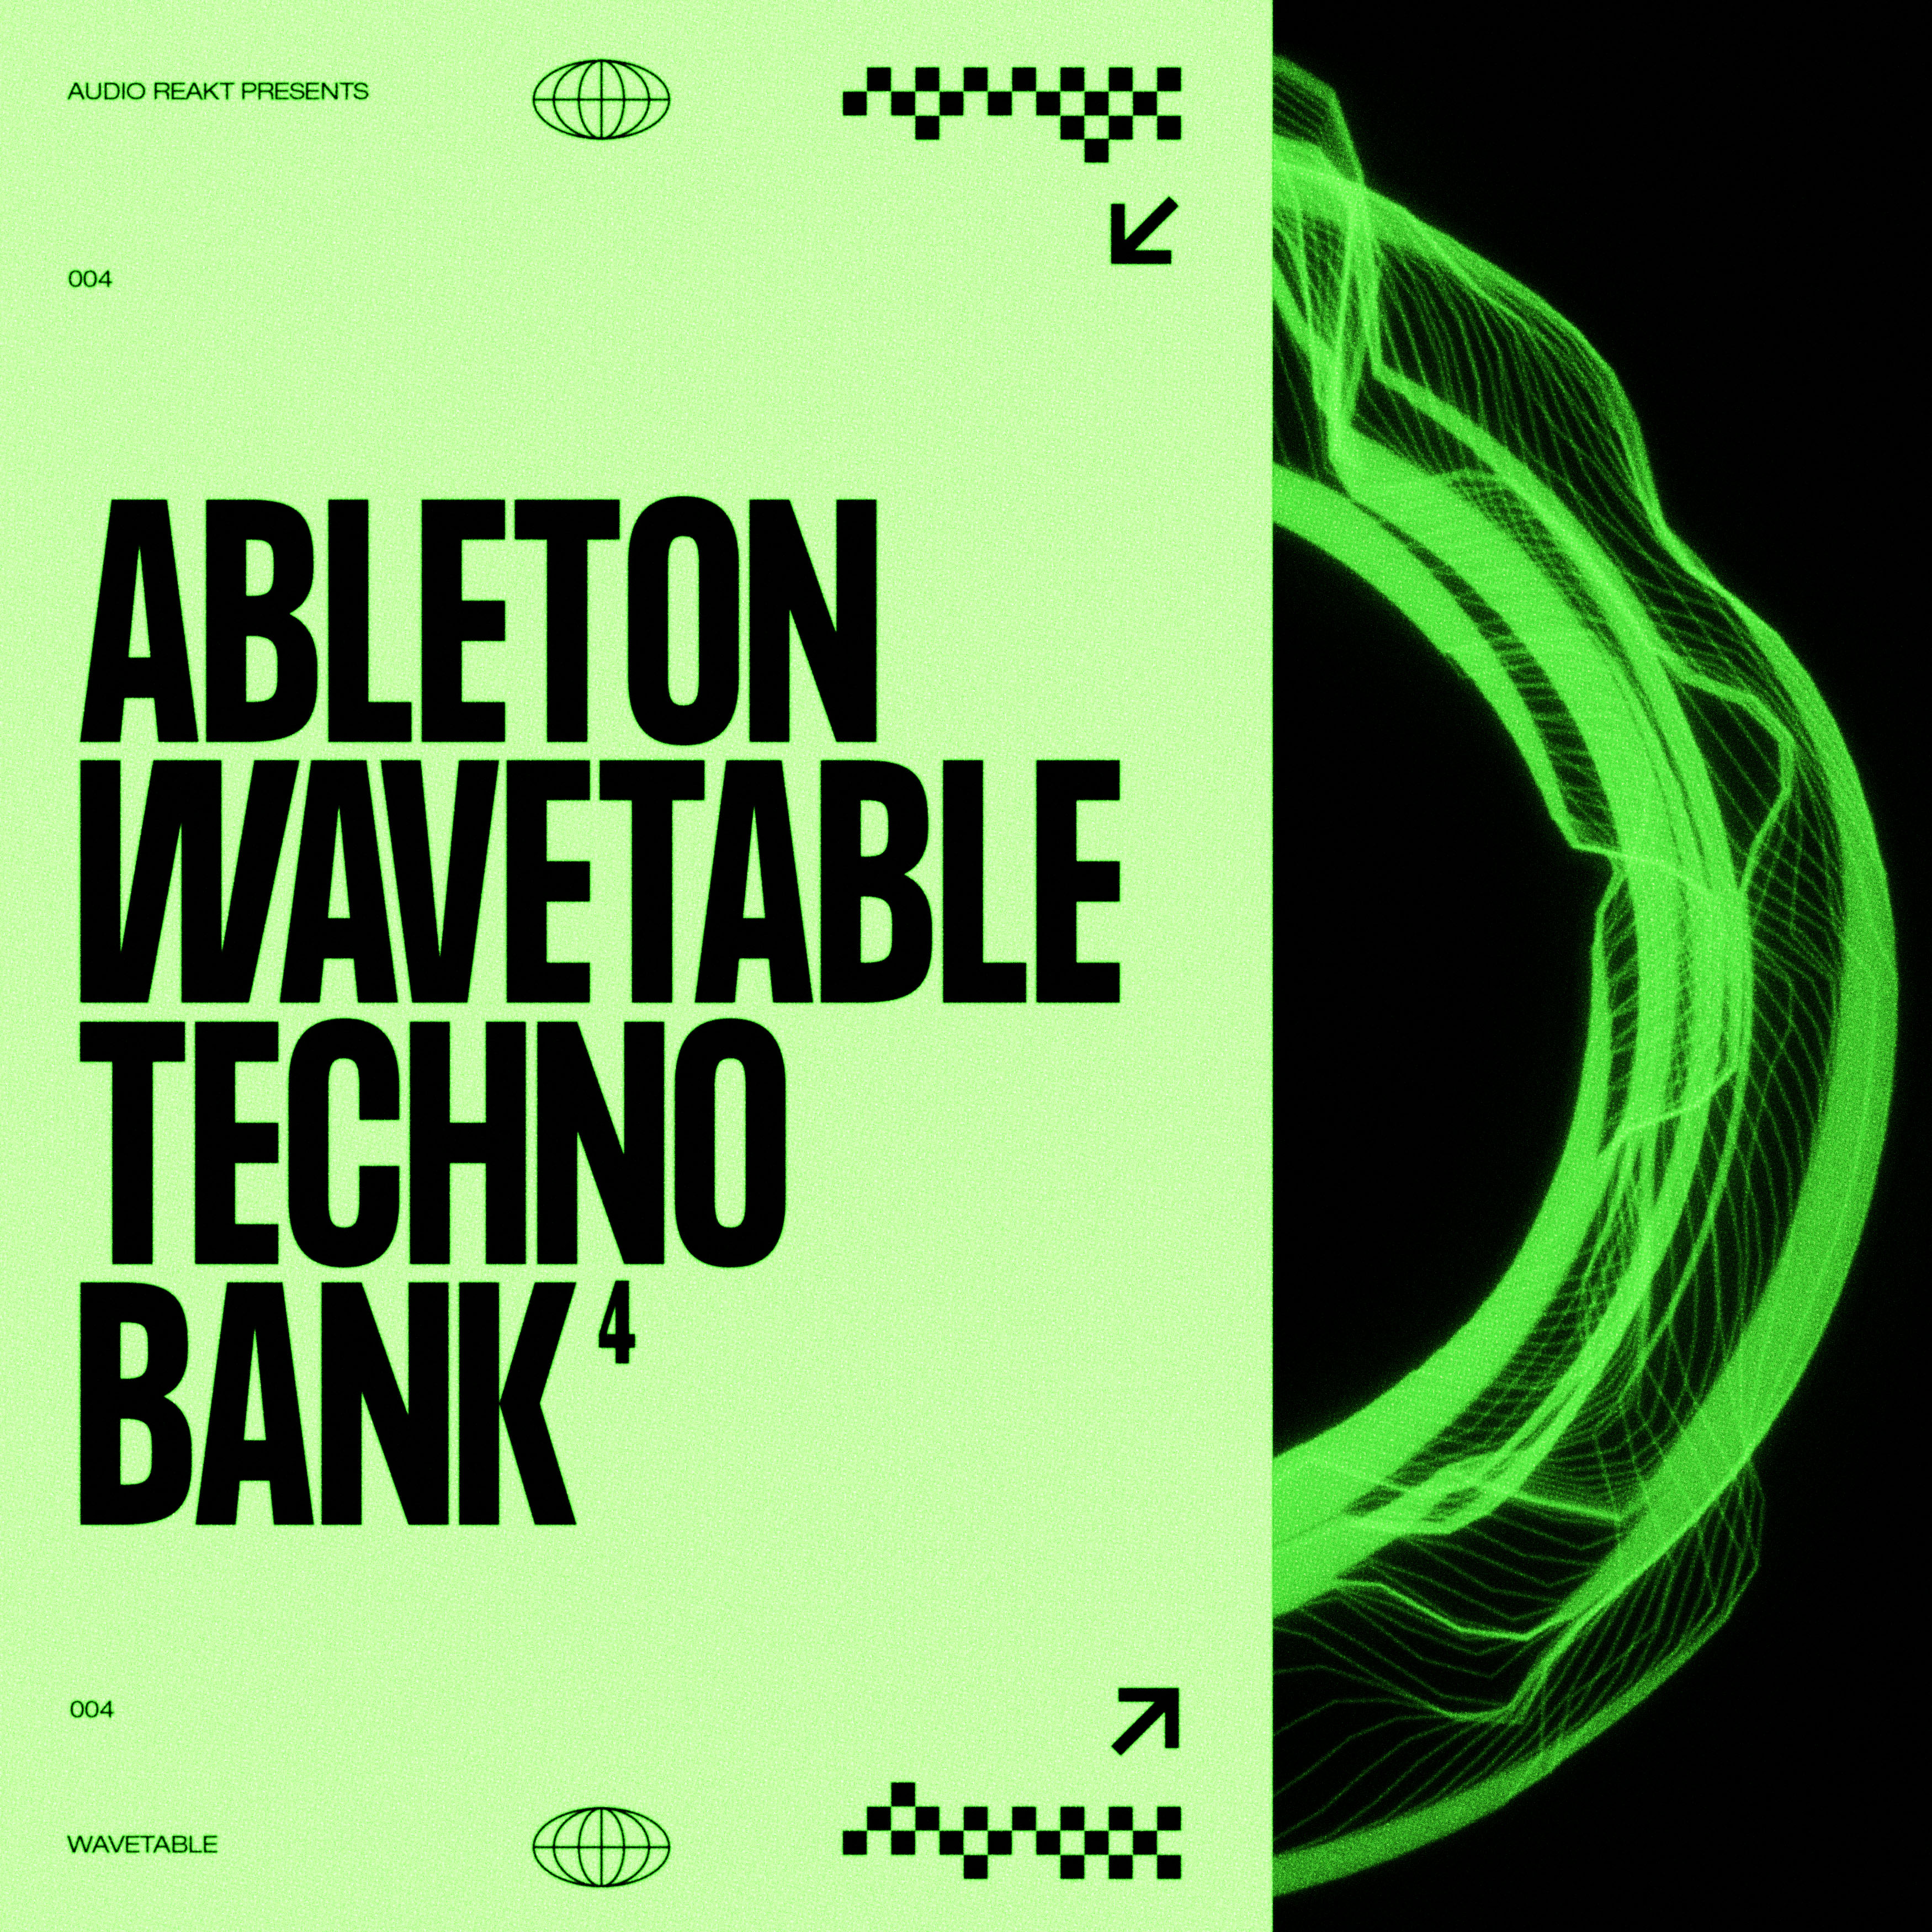 Audioreakt - Ableton Wavetable Techno Bank 4